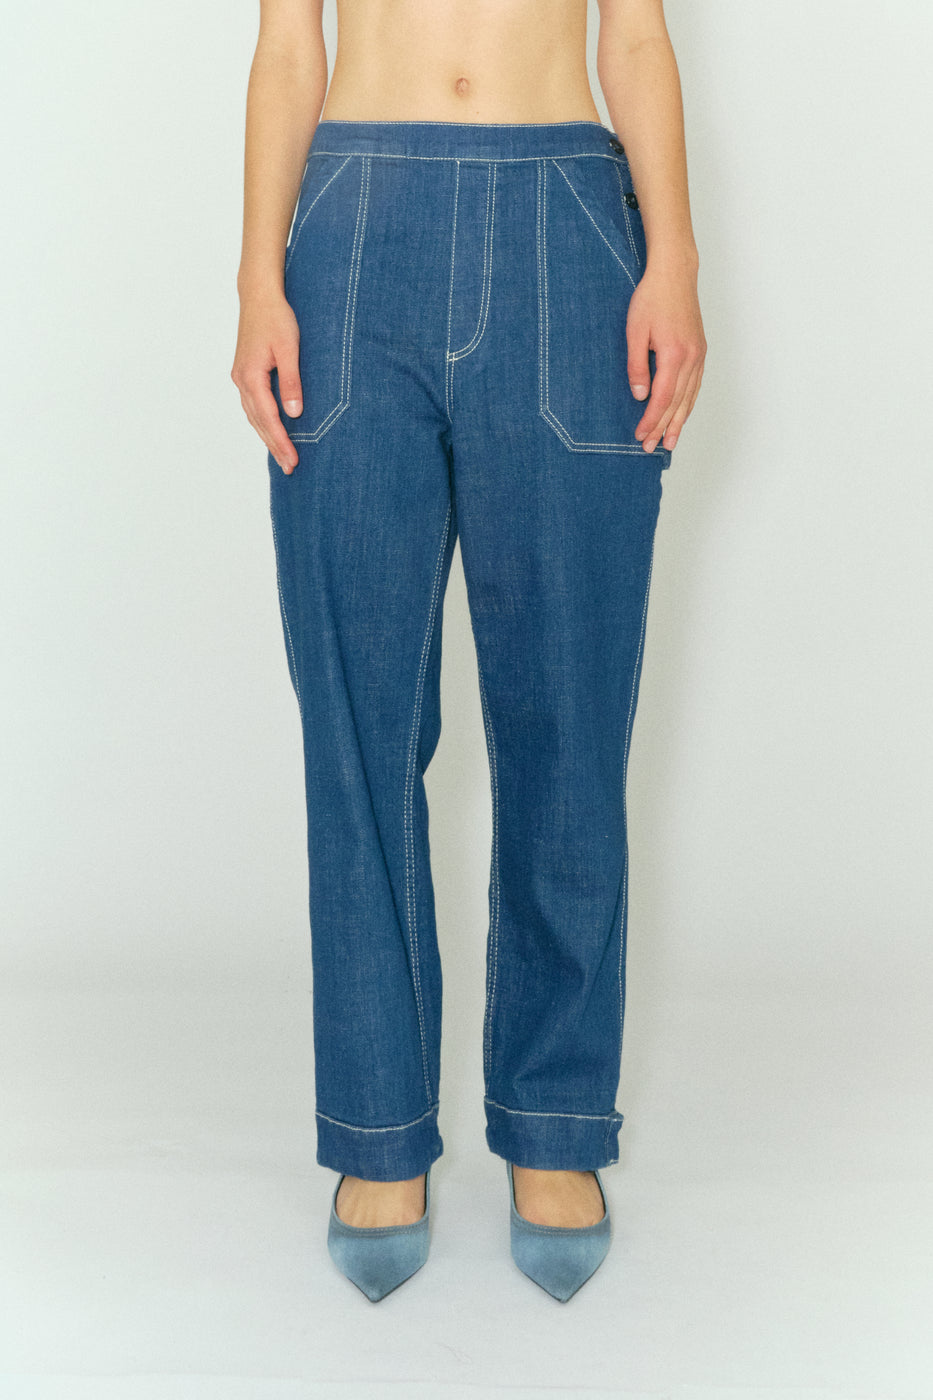 Tomorrow TRW-Stella Worker Jeans Wash Vintage Crude Mid Blue Jeans & Pants 51 Denim Blue